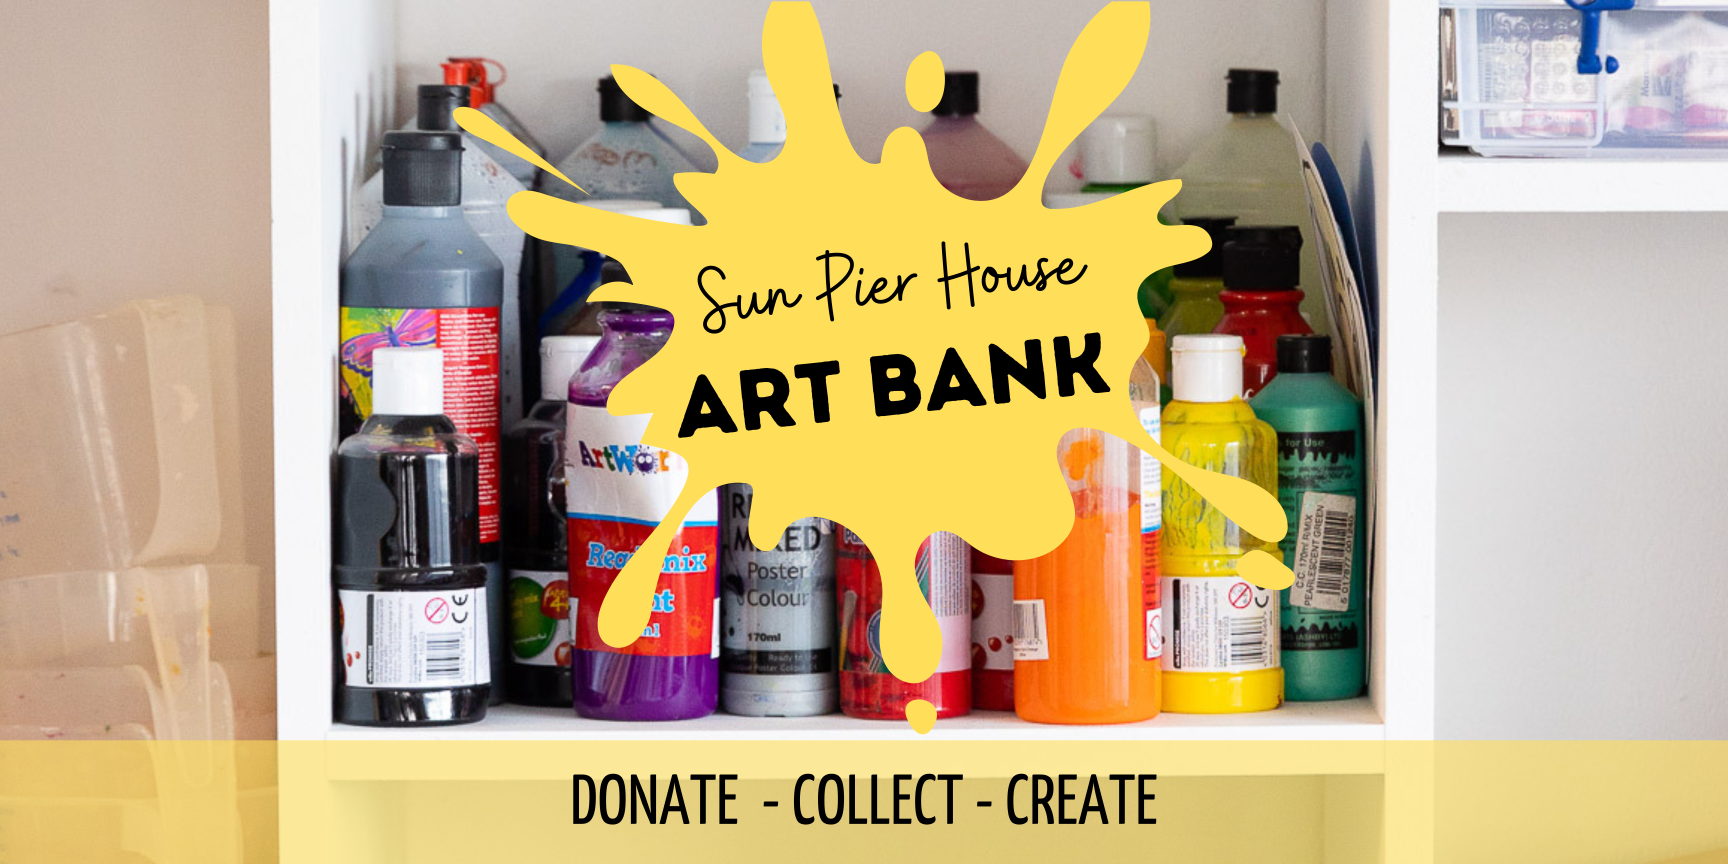 Sun Pier House Art Bank. Donate - Collect - Create. Free art materials